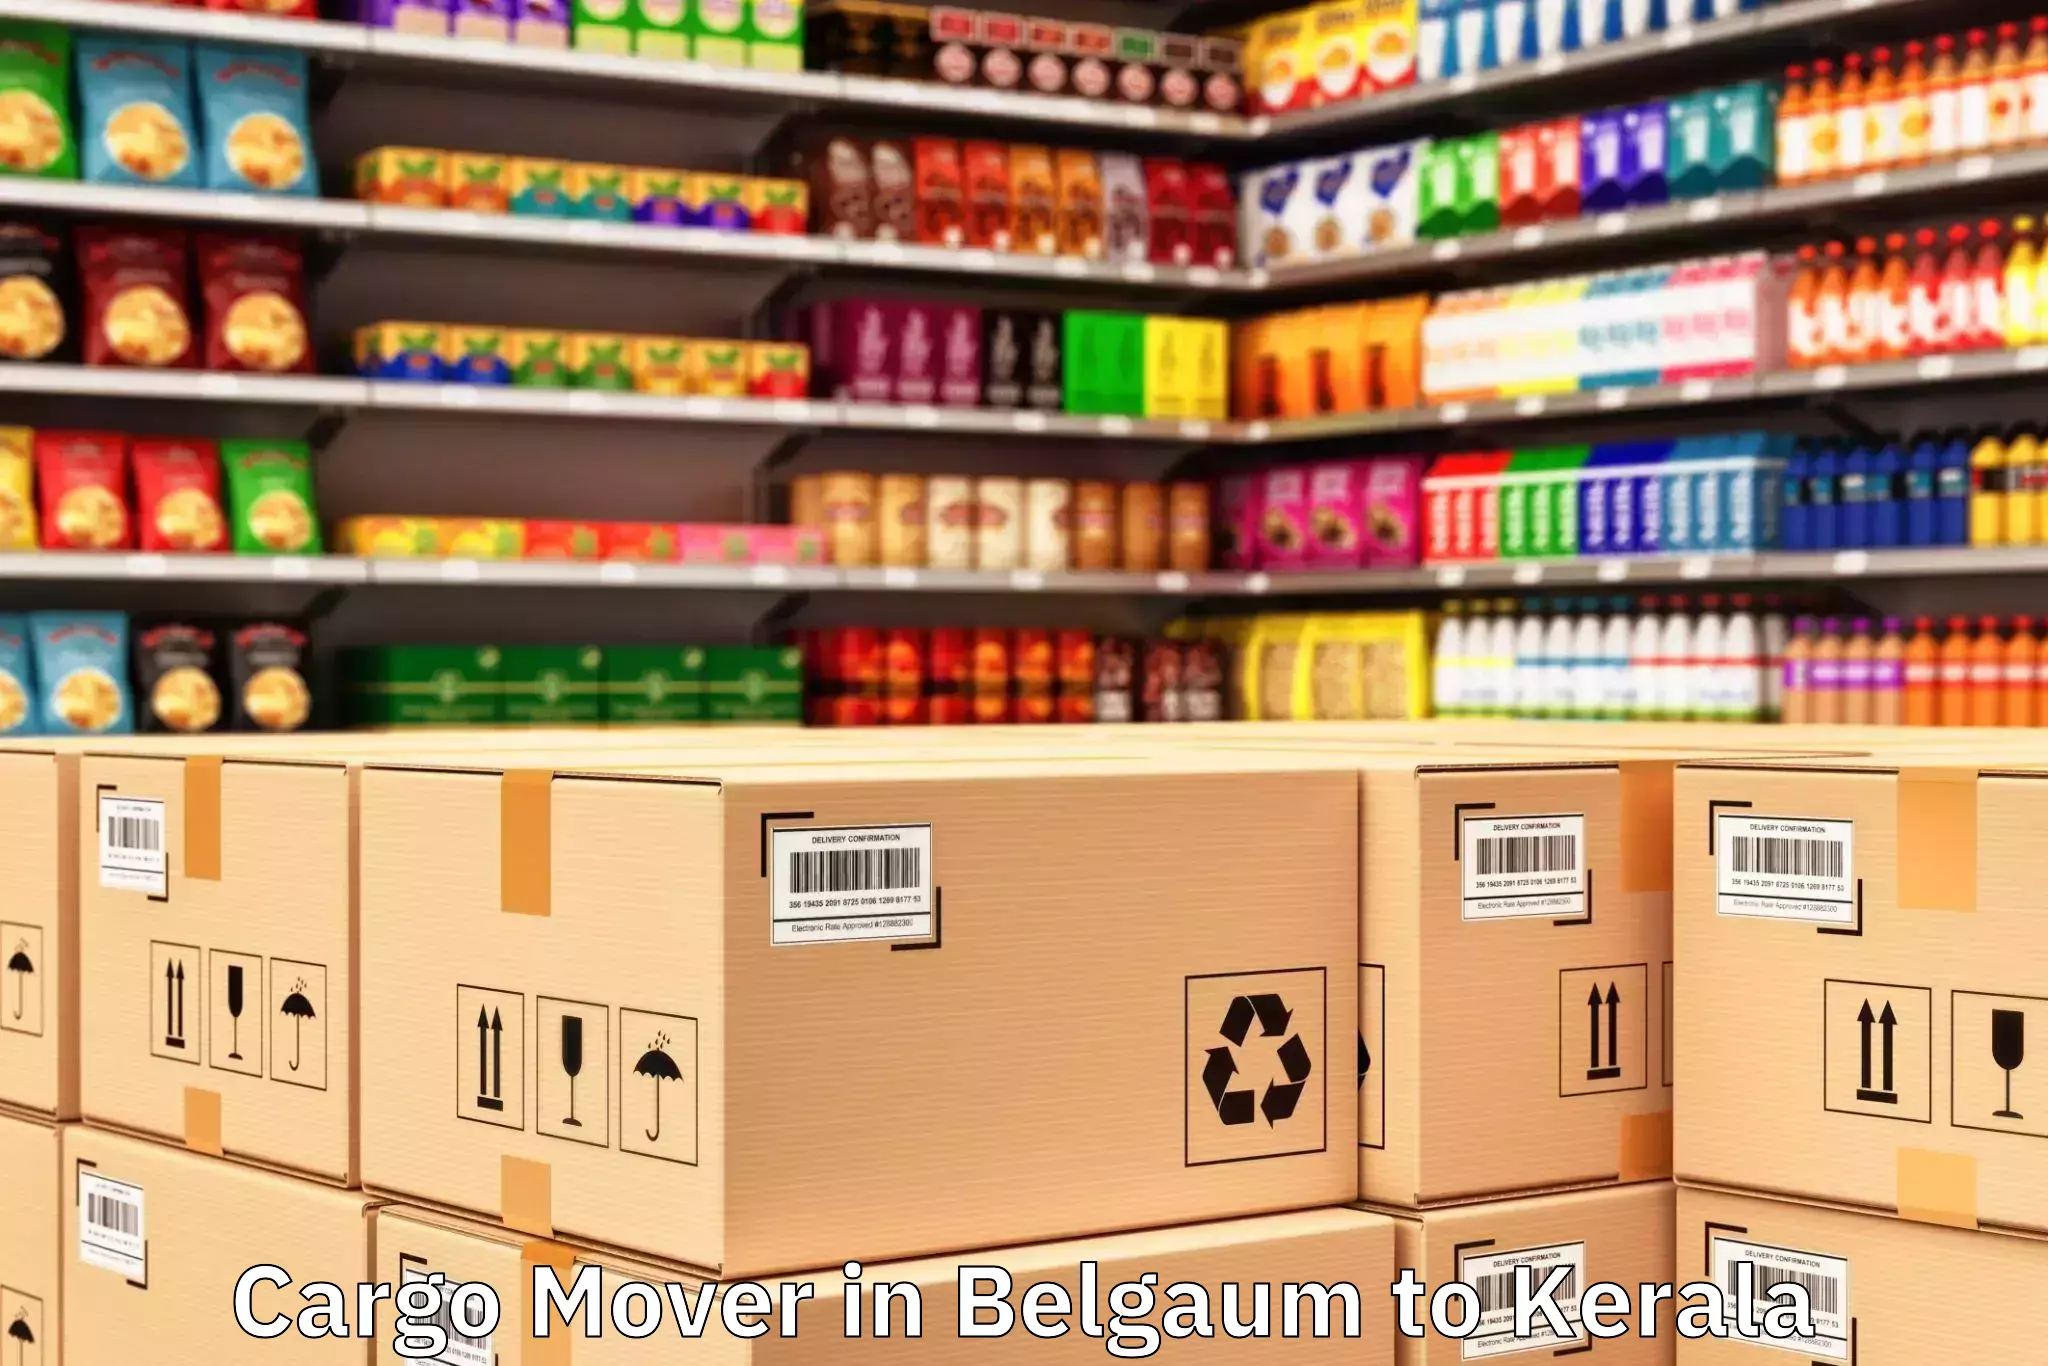 Top Belgaum to Kerala Cargo Mover Available